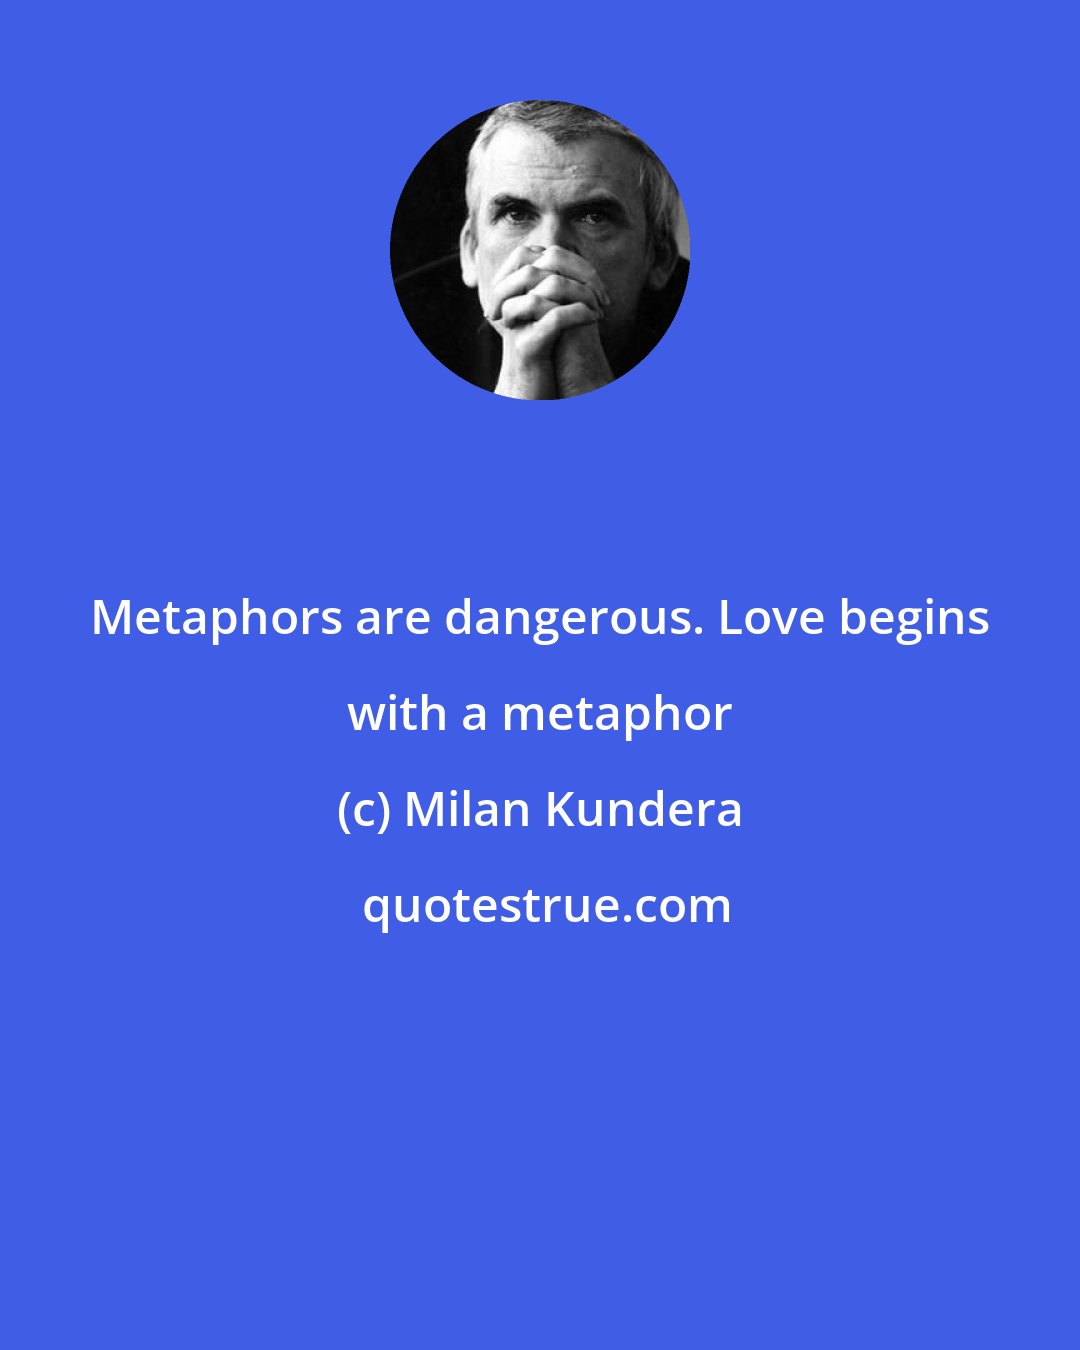 Milan Kundera: Metaphors are dangerous. Love begins with a metaphor